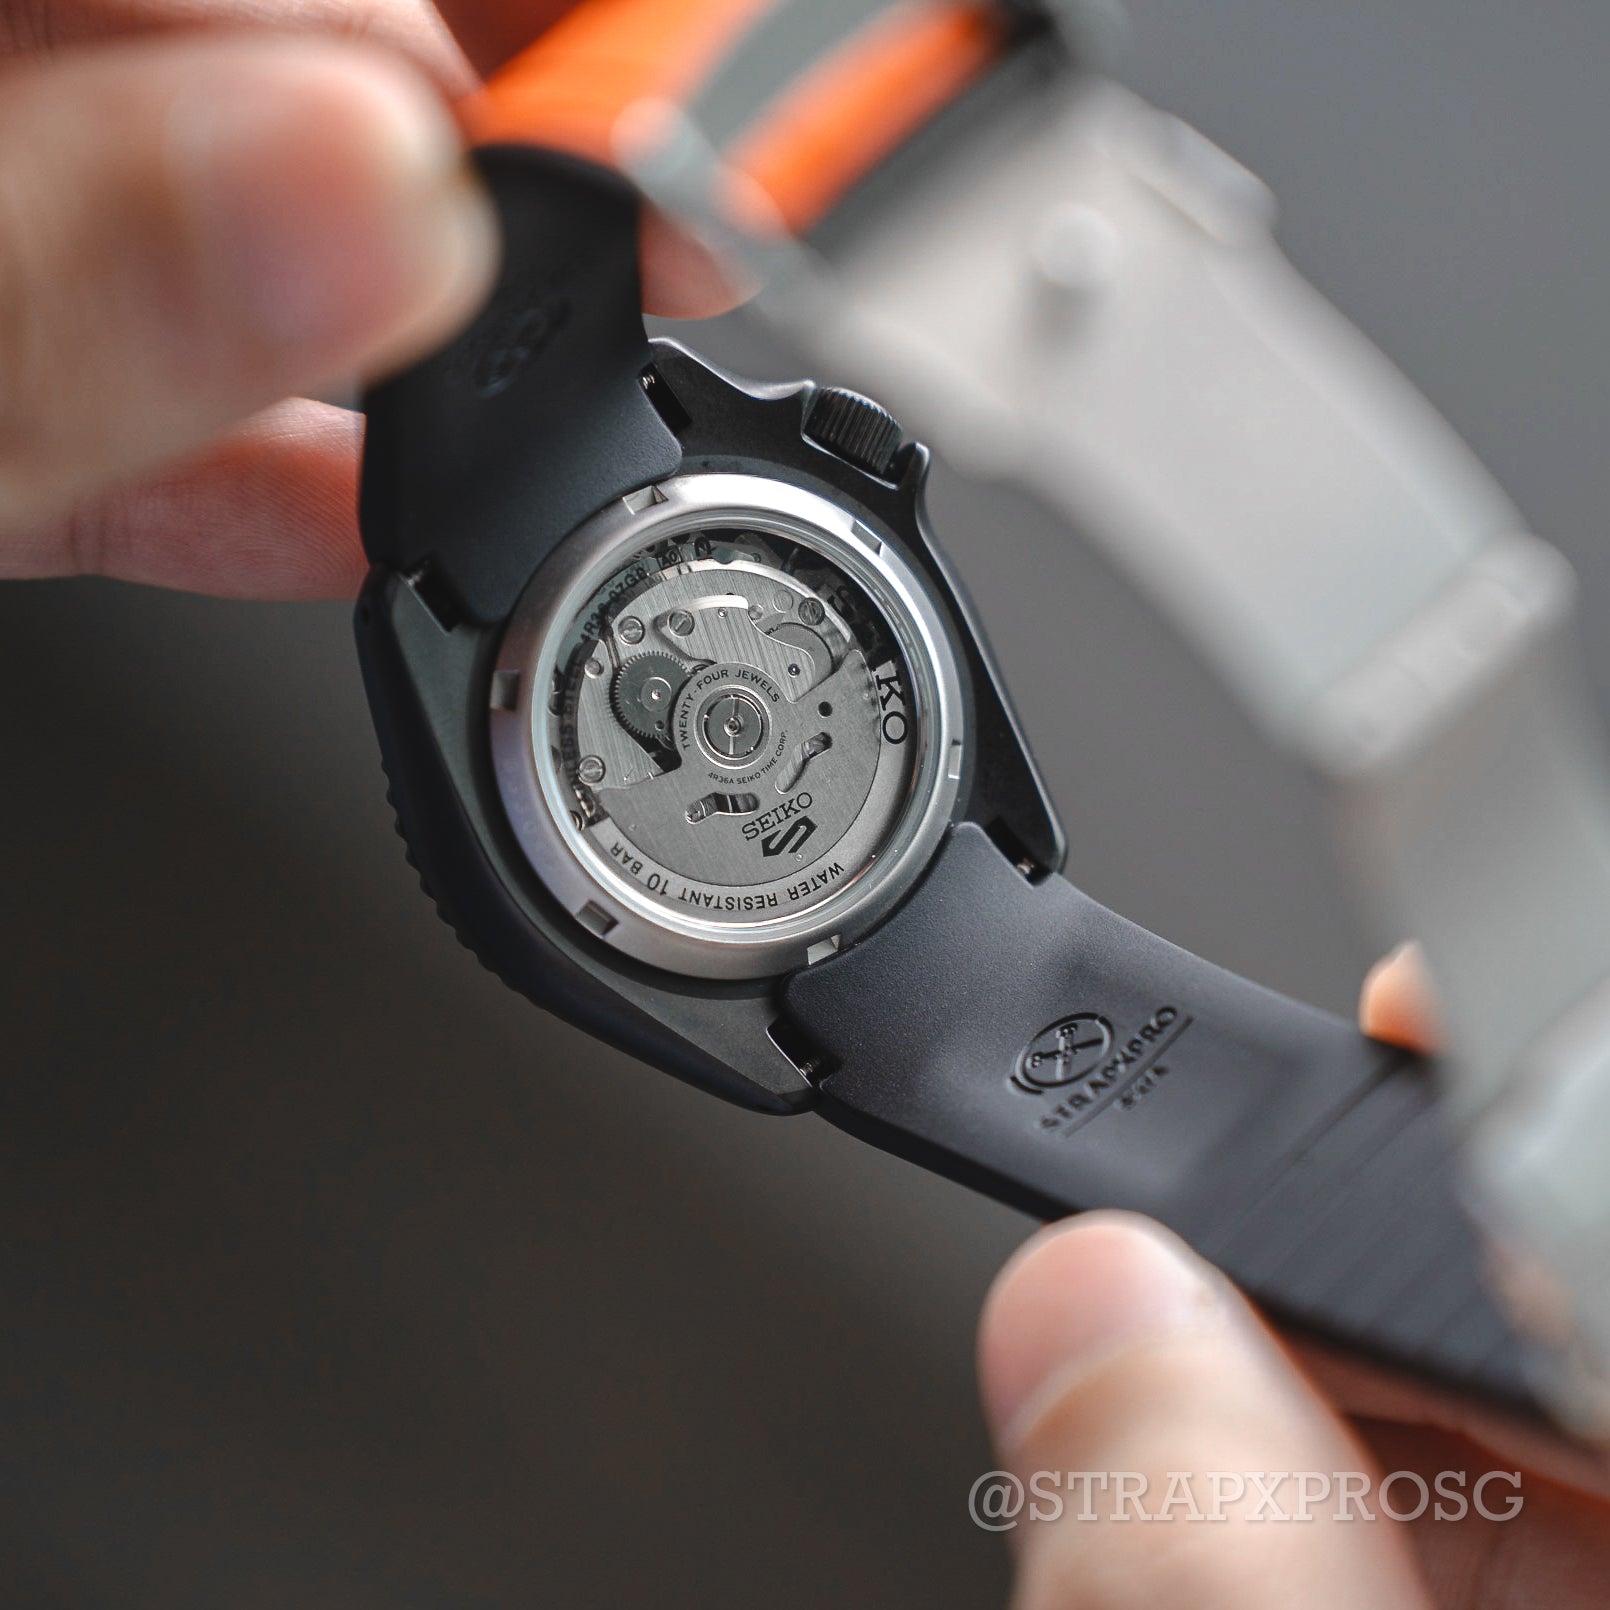 StrapXPro Rubber Watch Strap for Seiko 5 Sport 5KX / GMT